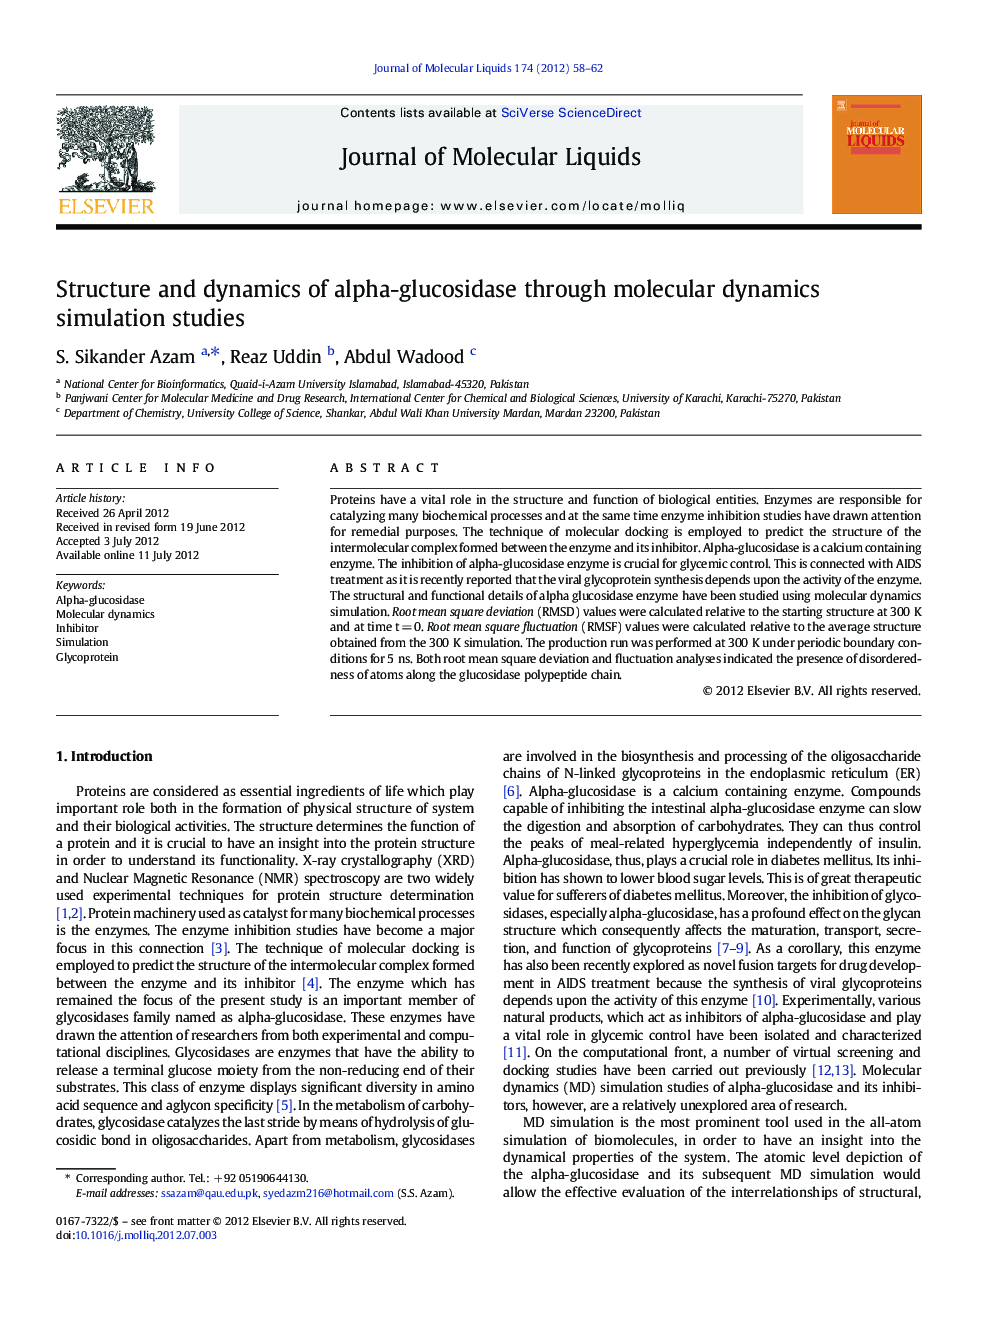 Structure and dynamics of alpha-glucosidase through molecular dynamics simulation studies